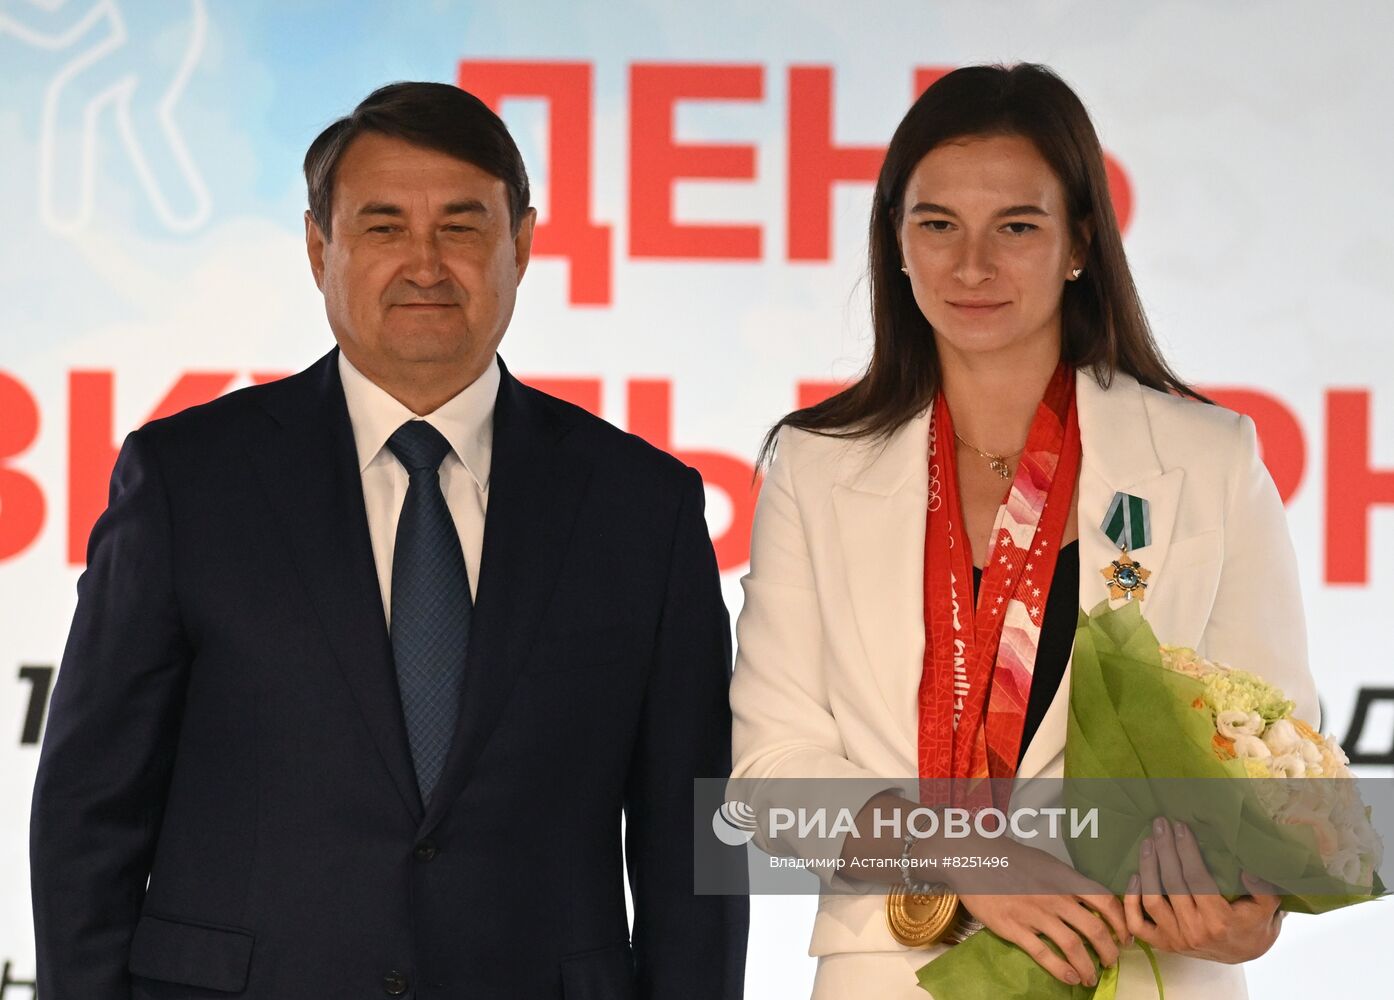 Помощник президента РФ И. Левитин наградил российских олимпийцев